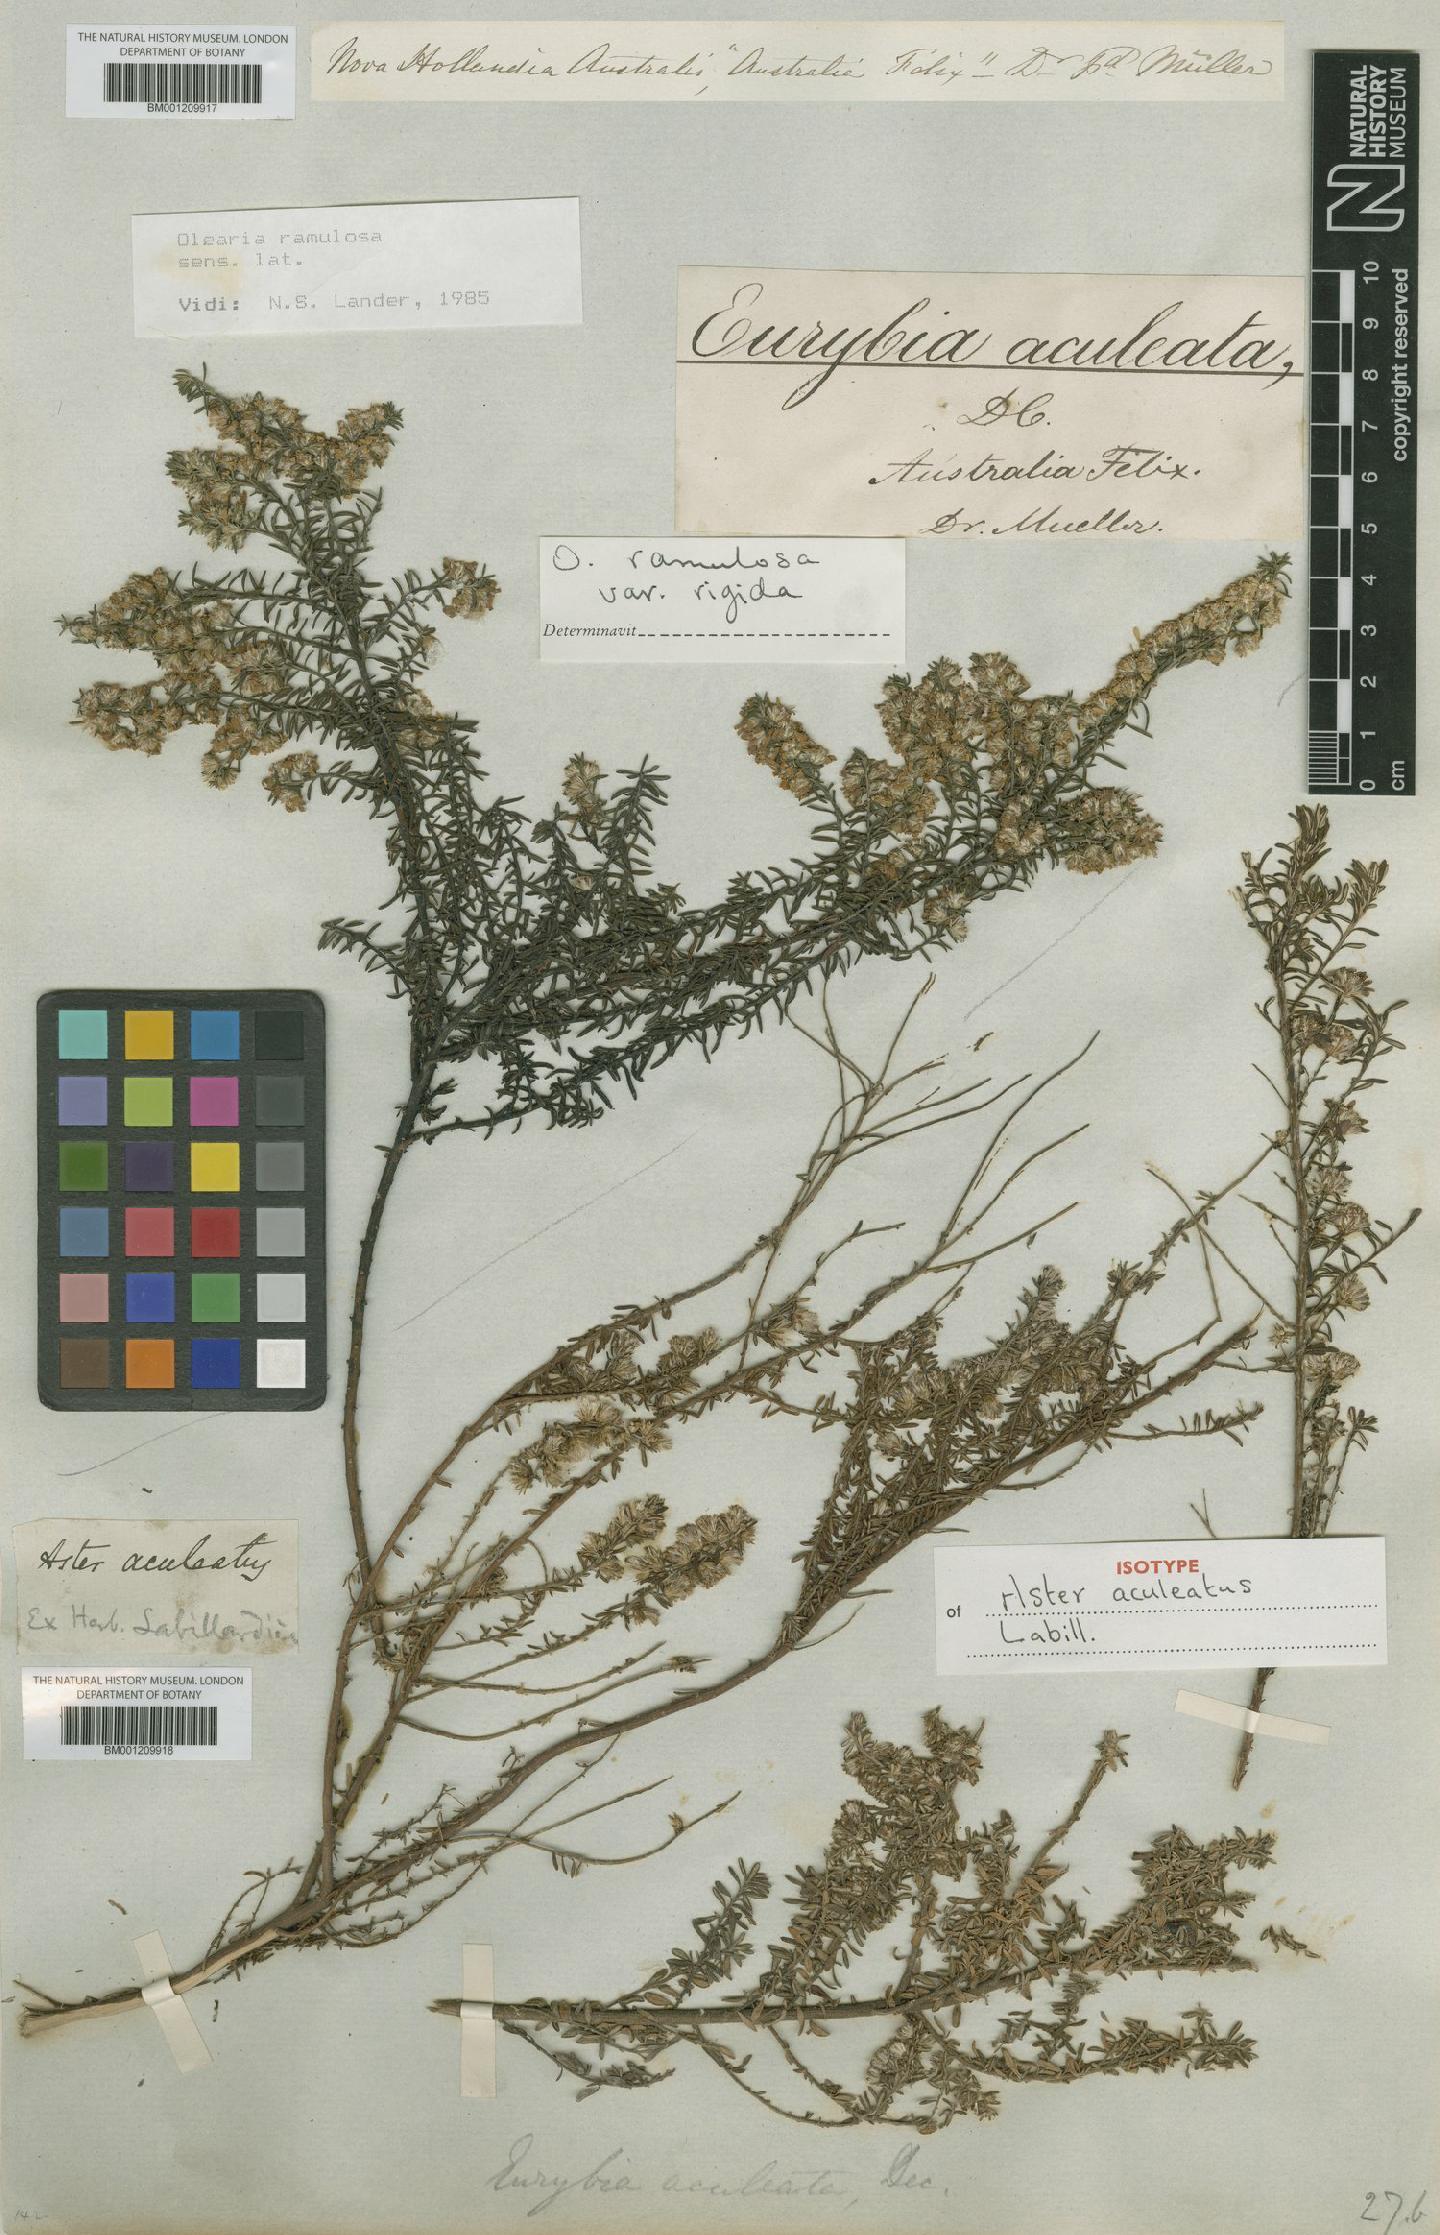 To NHMUK collection (Olearia ramulosa (Labill.) Benth.; Non-Type; NHMUK:ecatalogue:8177956)